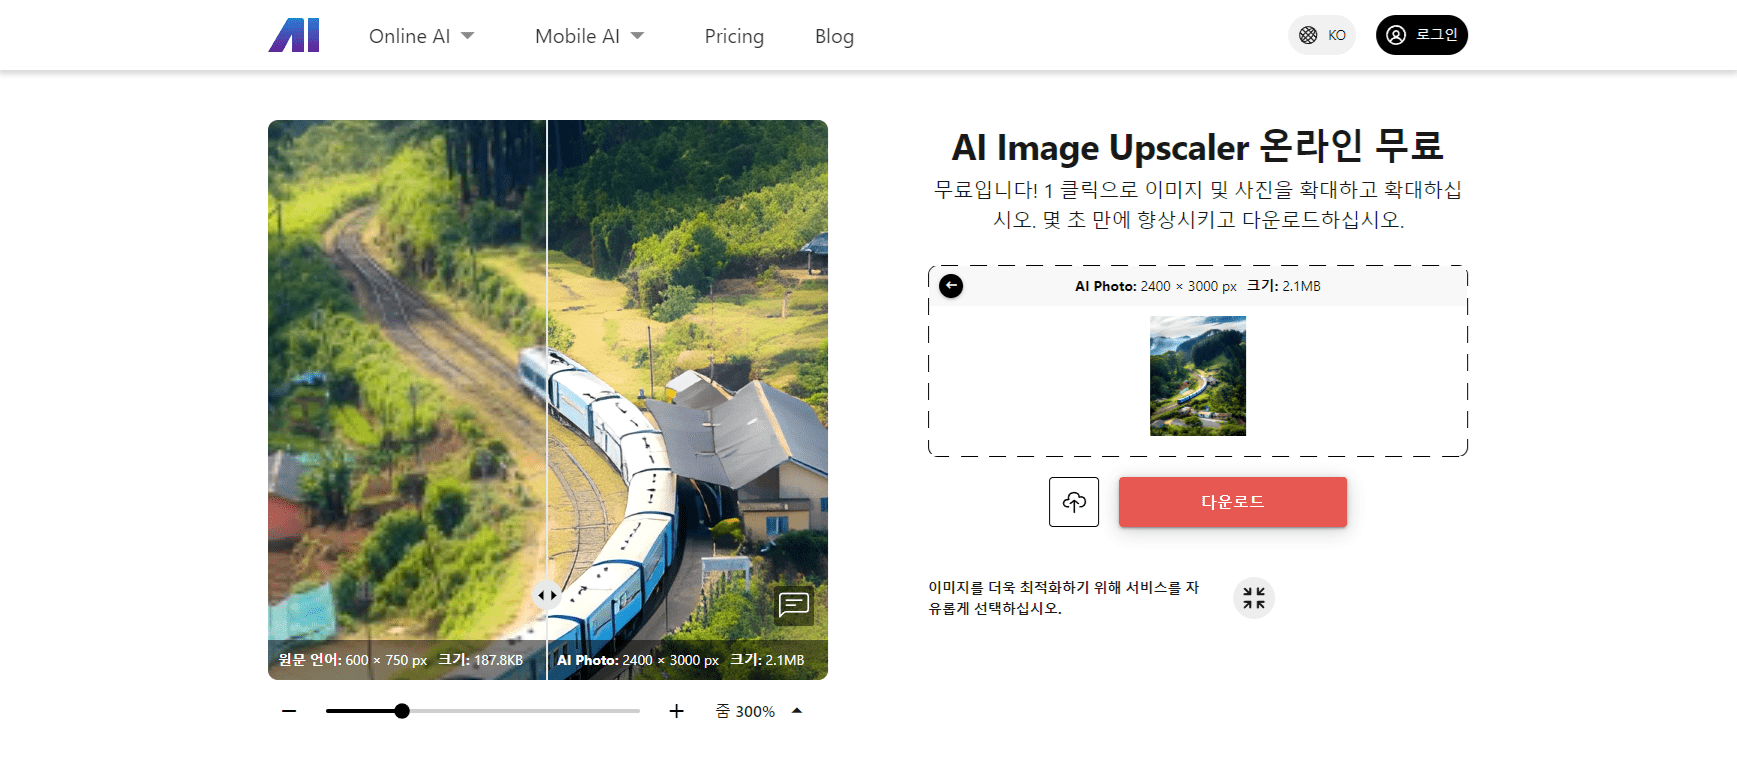 nero-ai-site-ai-image-upscaler-sample-iamge-check-download